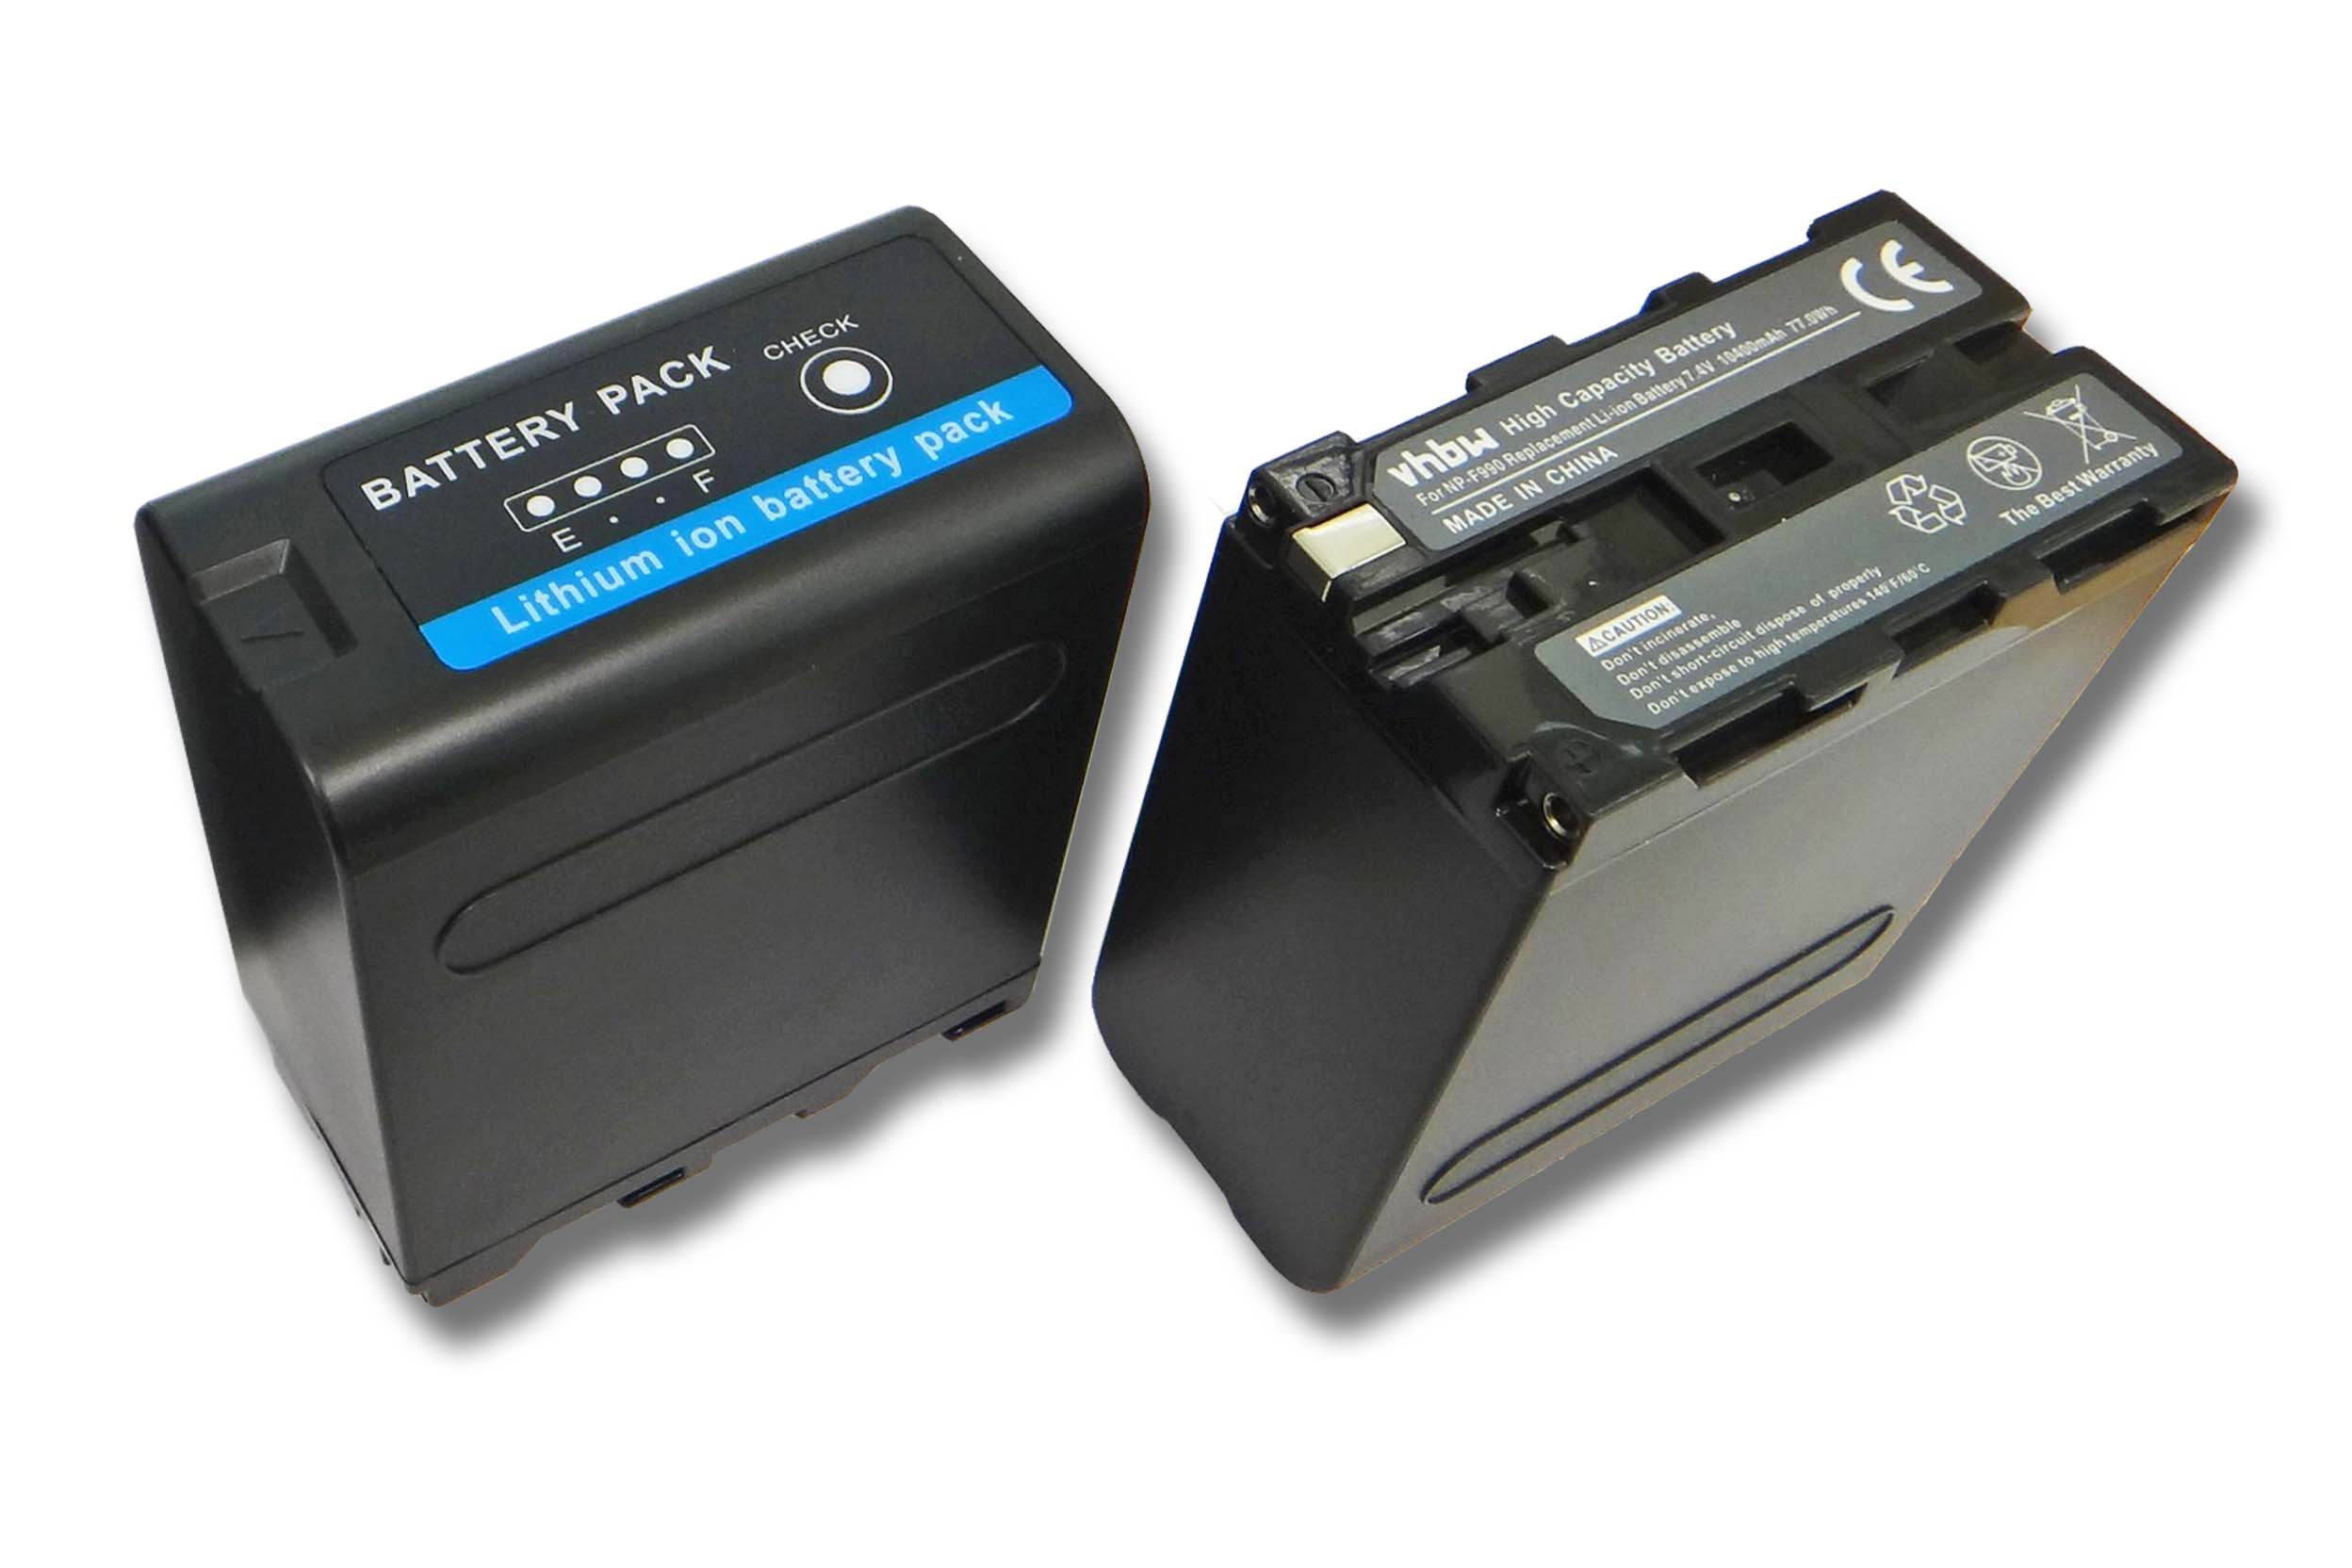 VHBW kompatibel mit Sony MiniDV 10400 Volt, DCR-VX2000 Akku Videokamera, DCR-VX2100, 7.4 DCR-VX9 Li-Ion DCR-VX700, series, - DSC-CD100